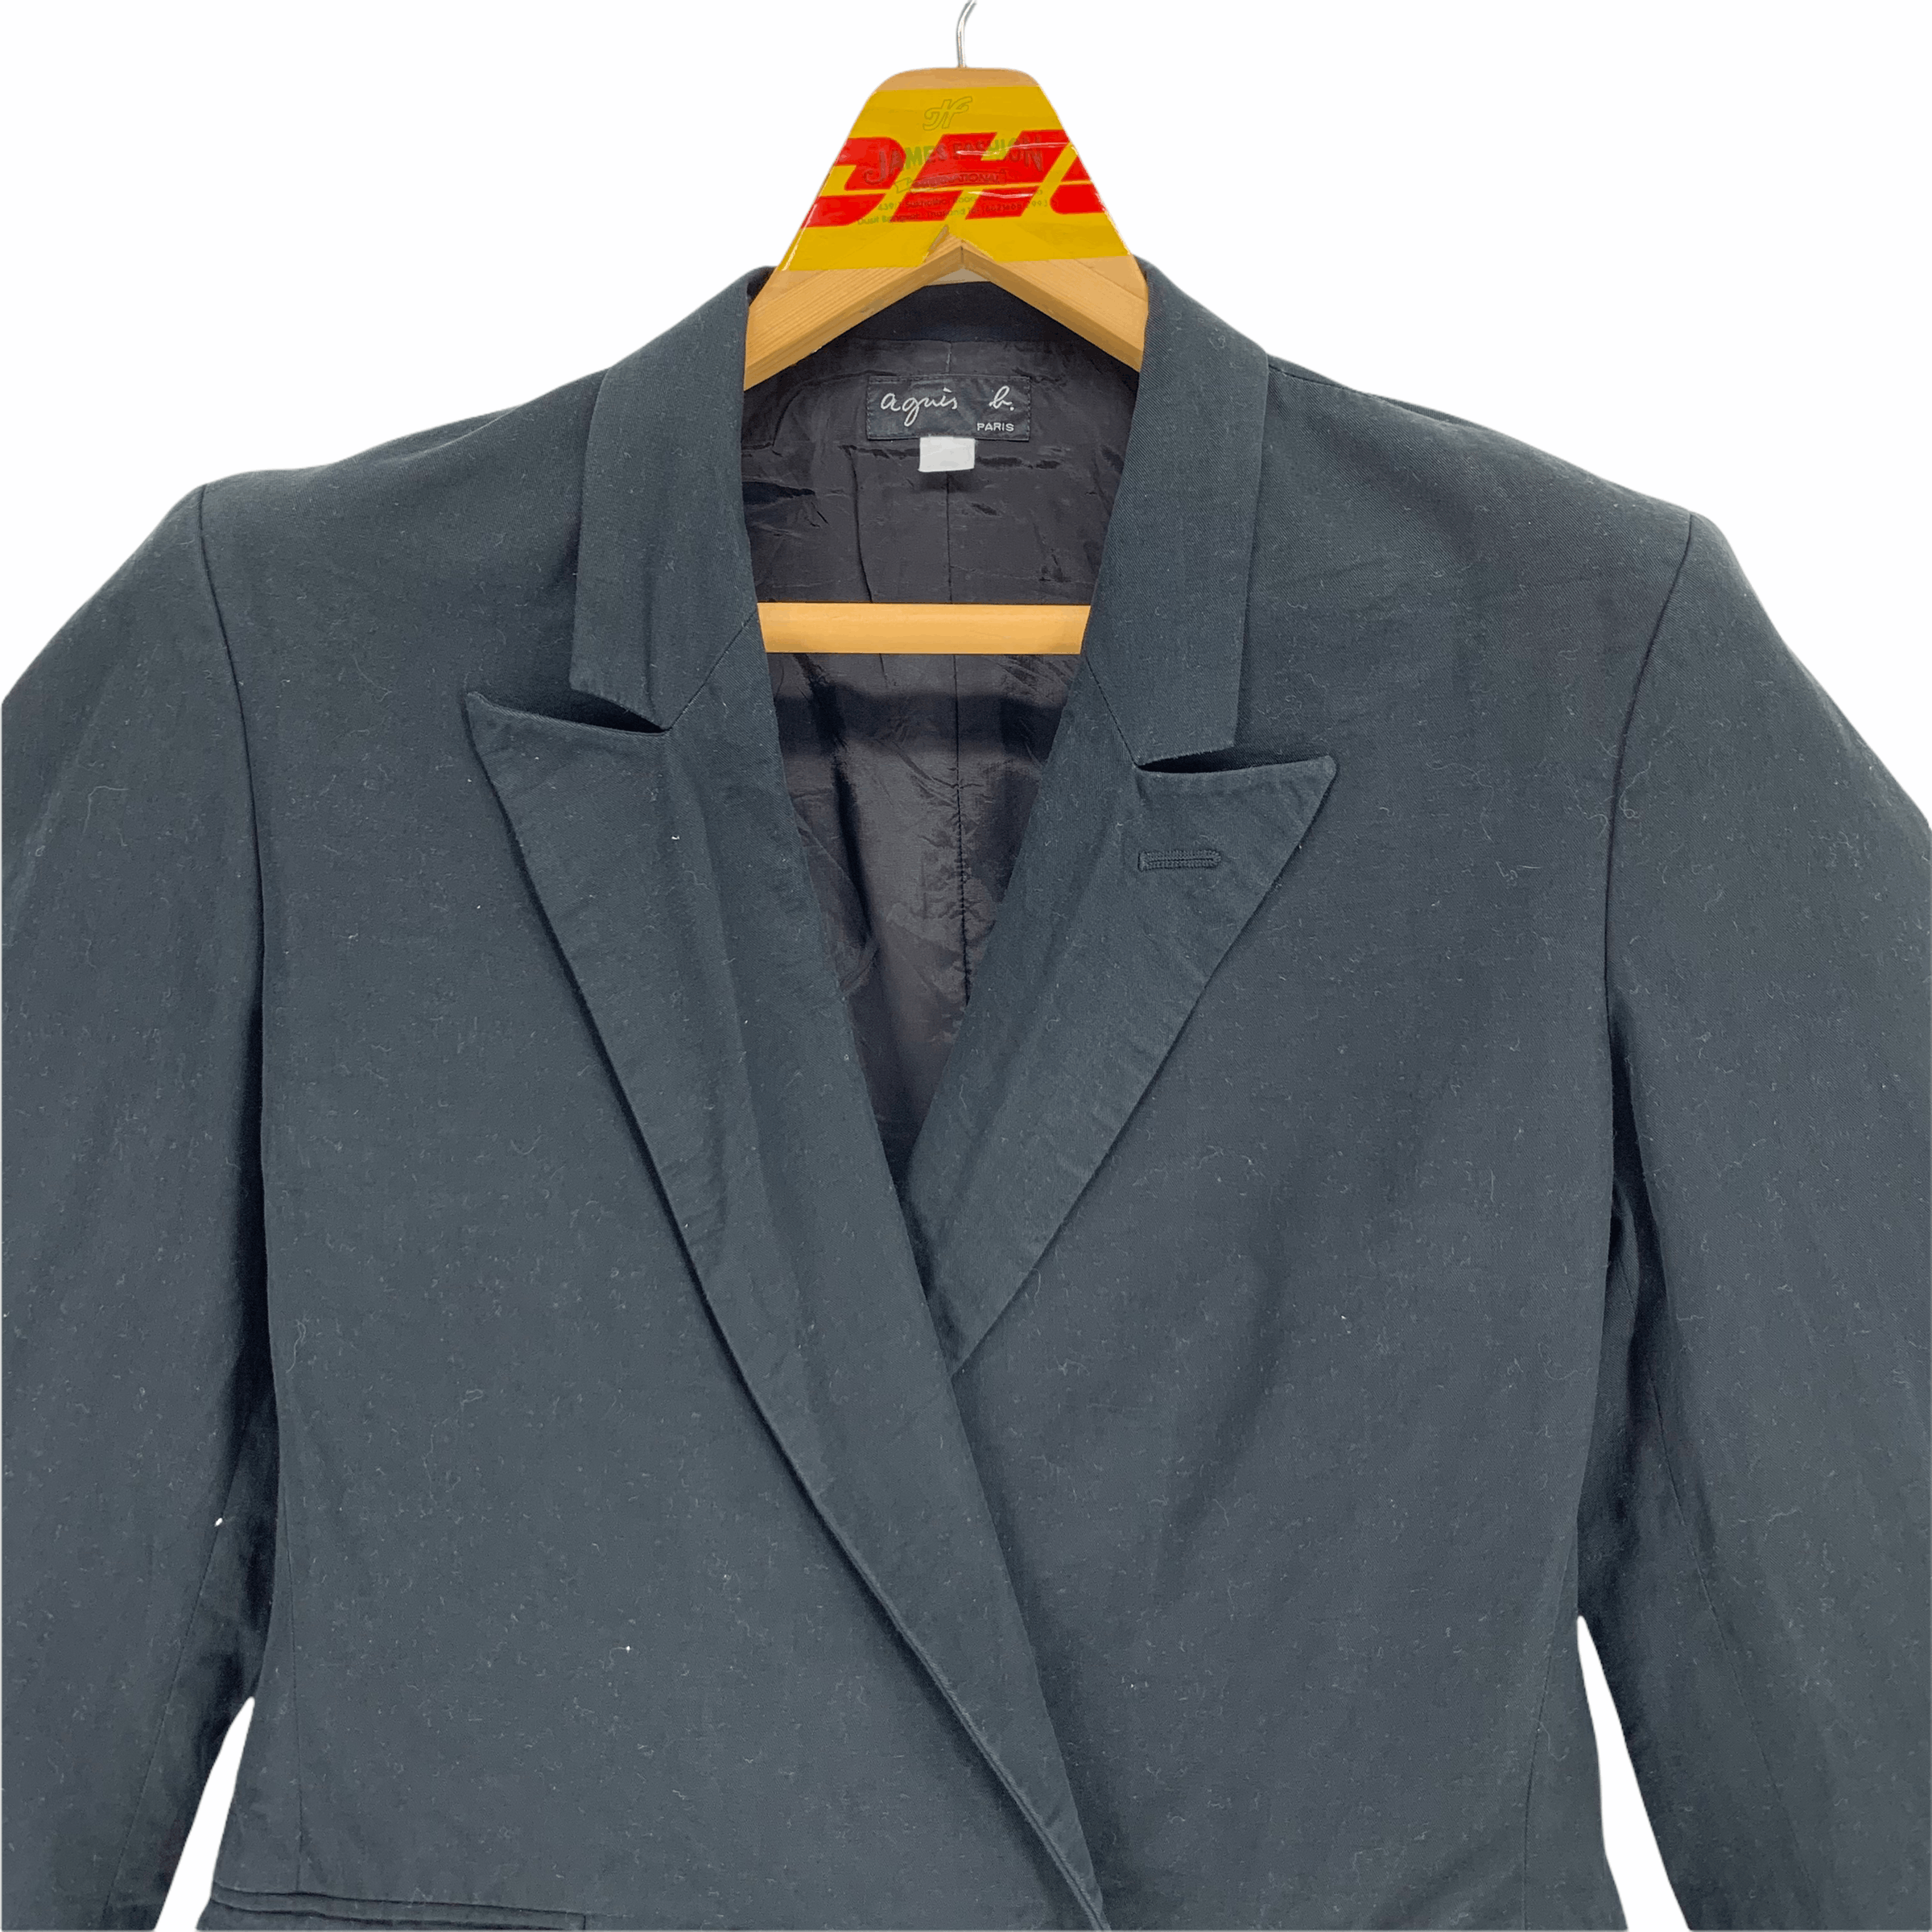 Agnes B. Agnes B. Made in Japan Suit Jacket / Blazer #3276-117 Size XS / US 0-2 / IT 36-38 - 2 Preview